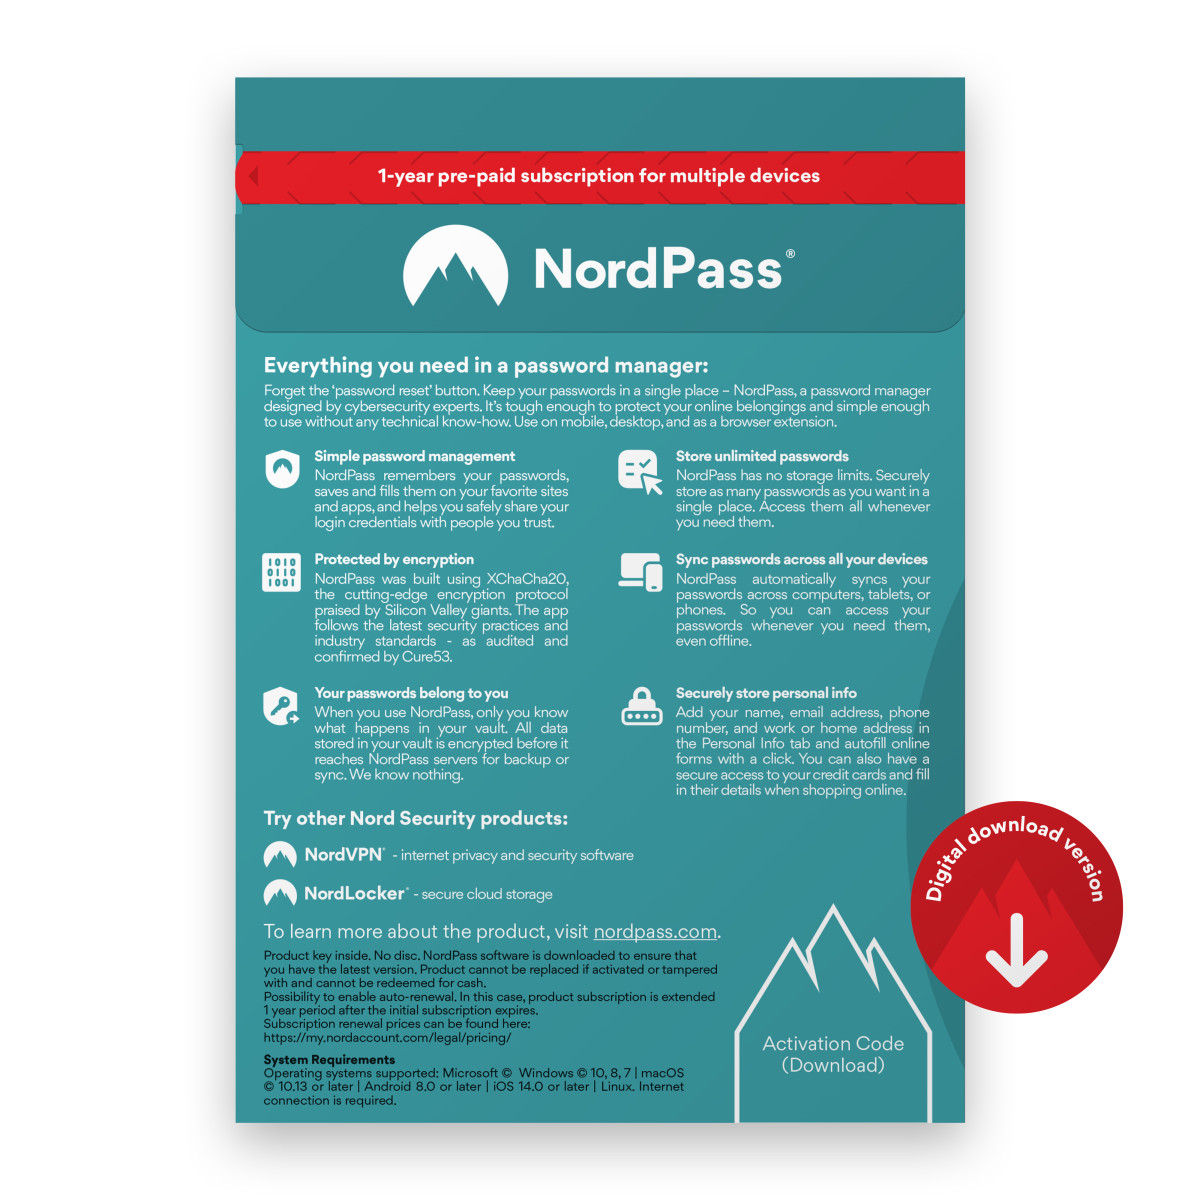 NordPass (Consumer Retail Product)